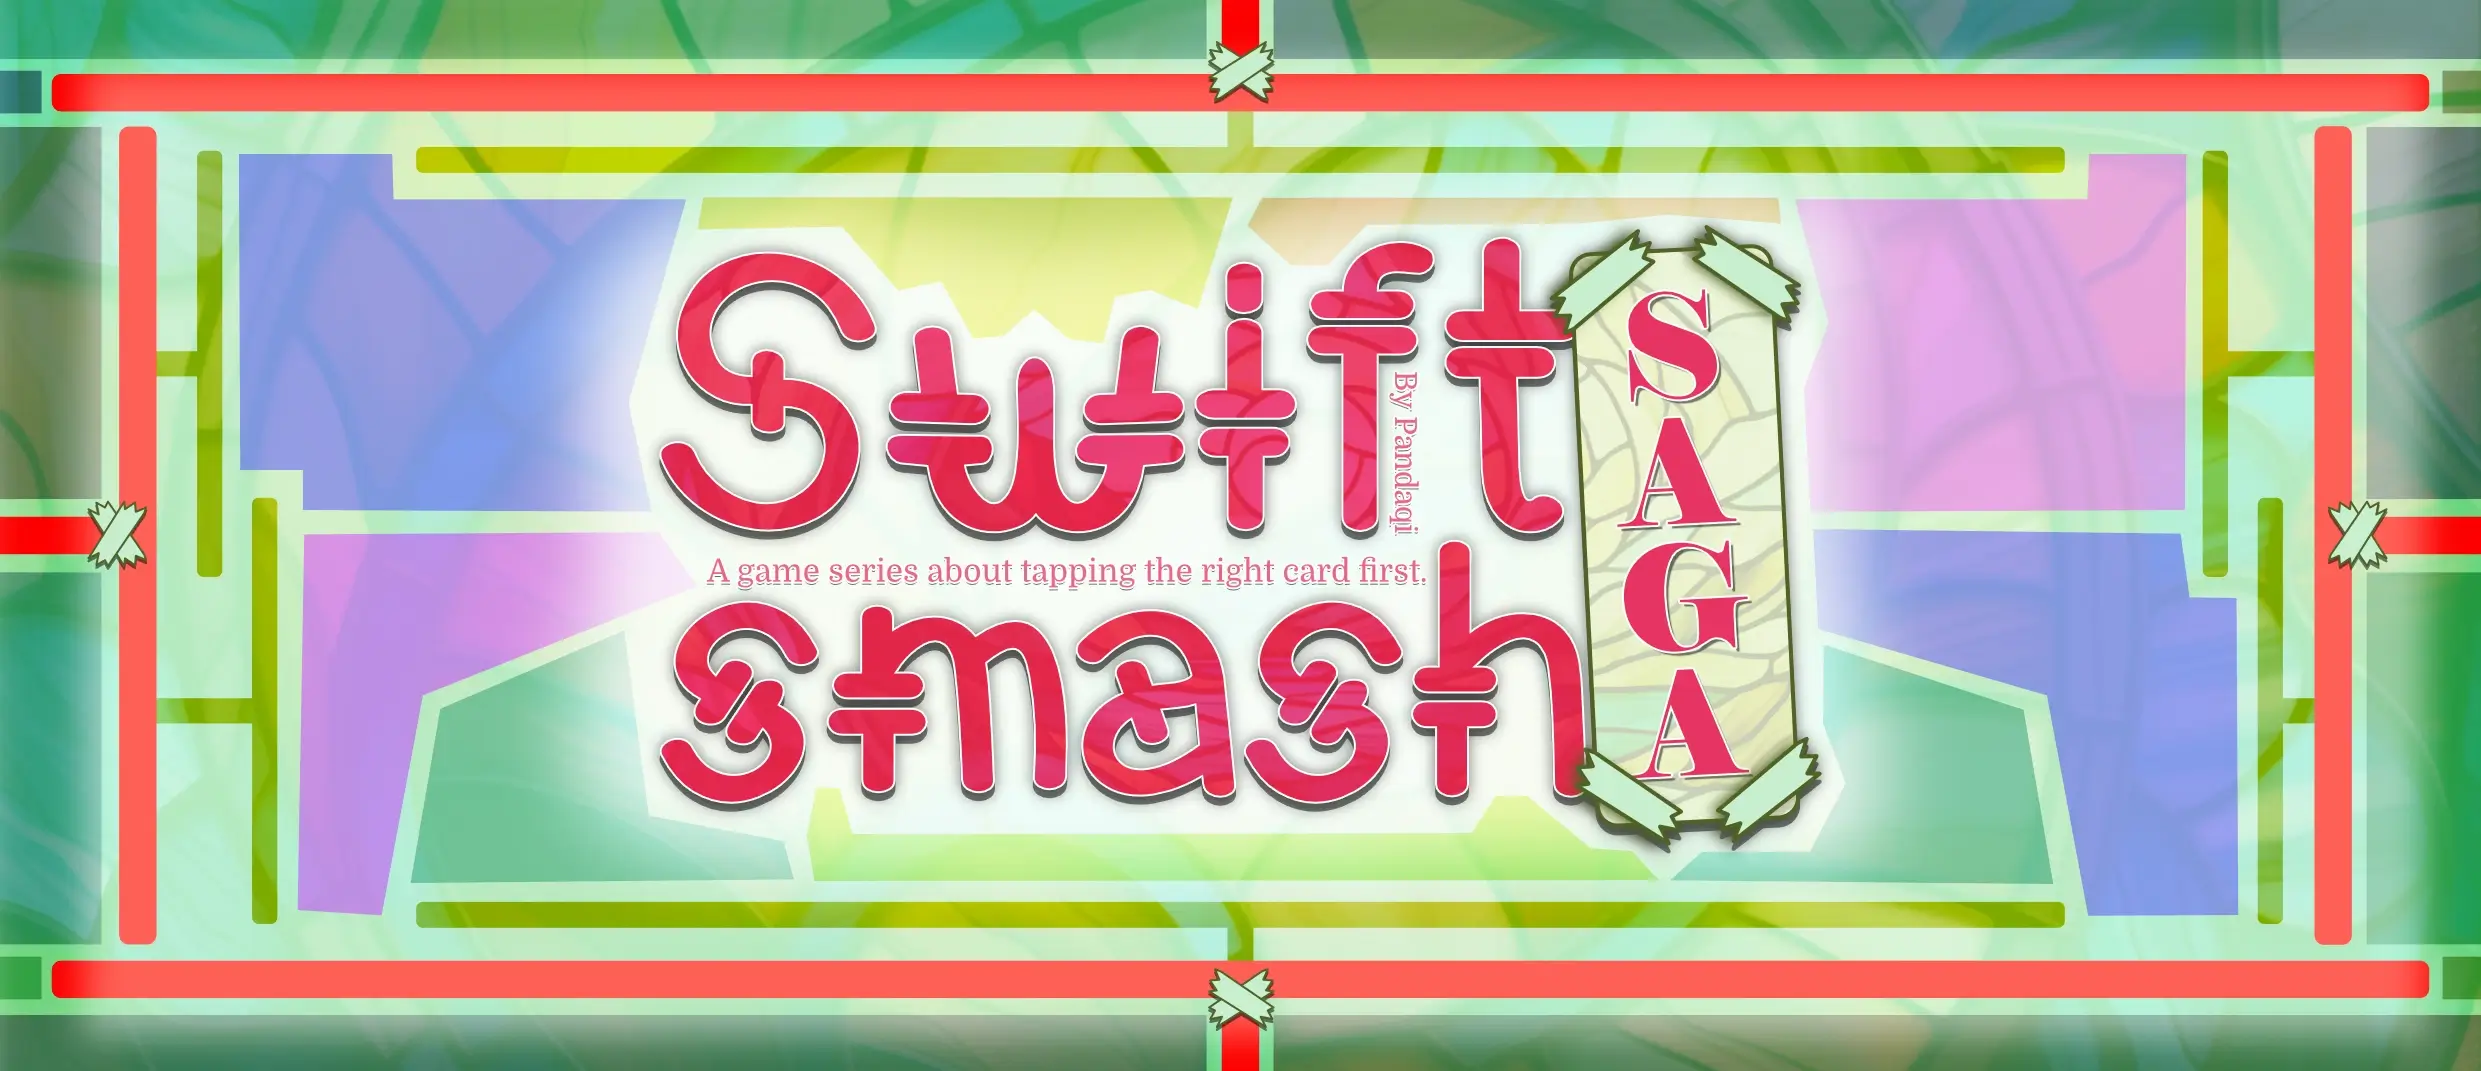 Swiftsmash saga header